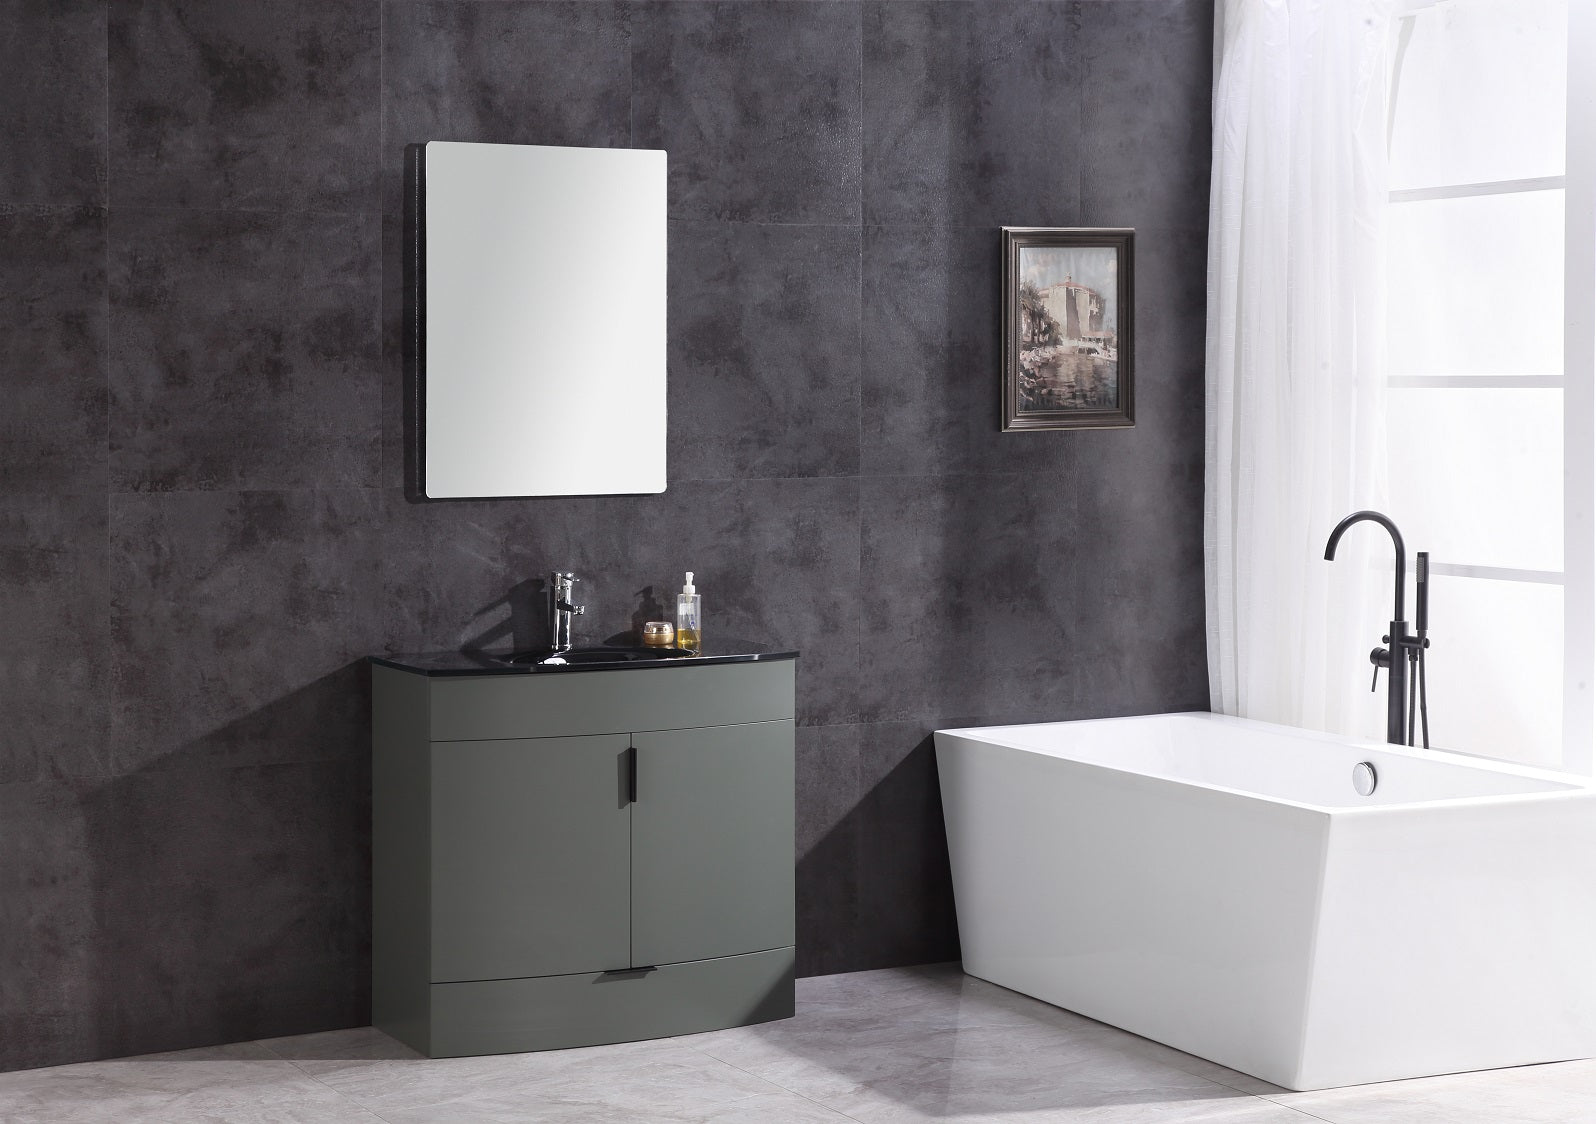 Legion Furniture Narrow 36" Bathroom Vanity & Black Sink WTM8130-36 (36" x 18" x 33")